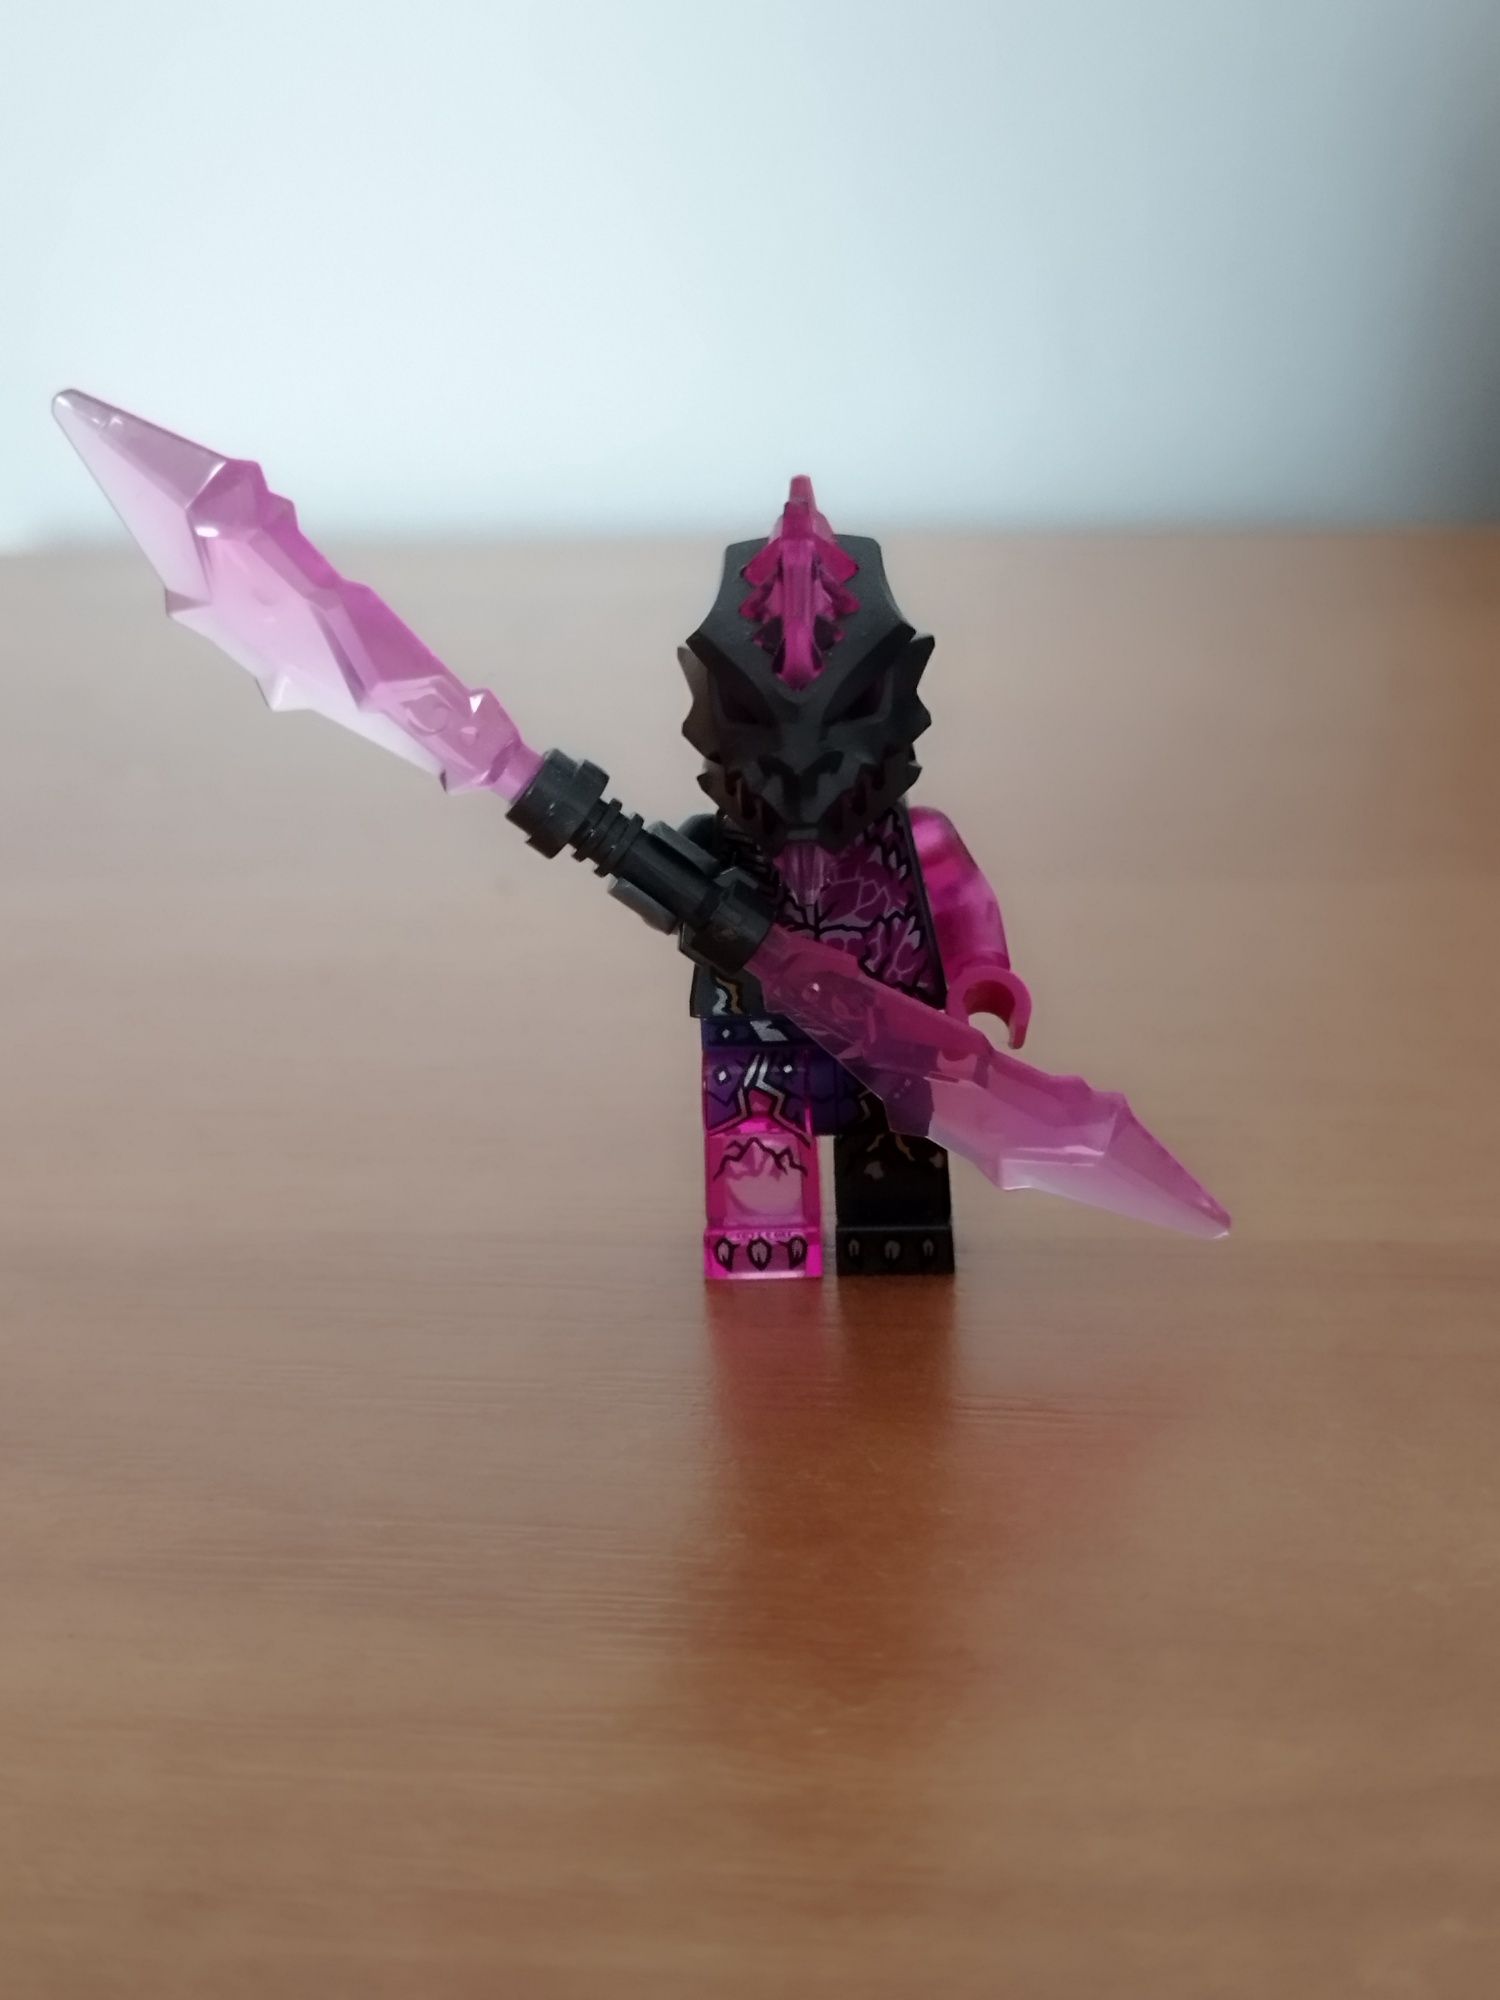 LEGO ninjago crystalized